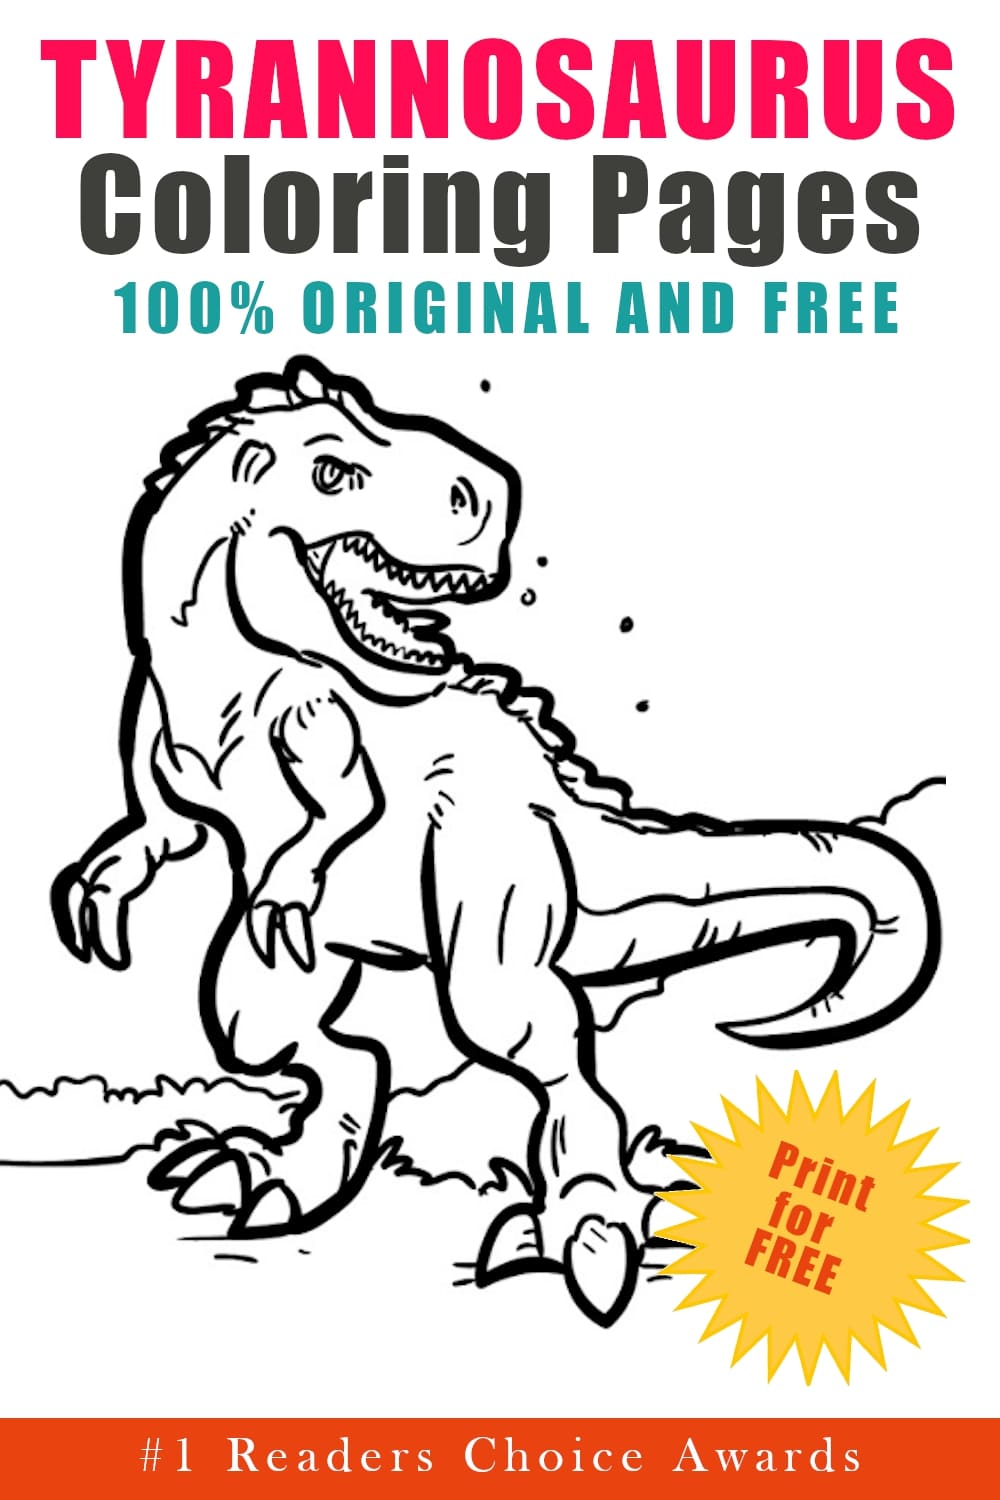 original and free tyrannosaurus coloring pages